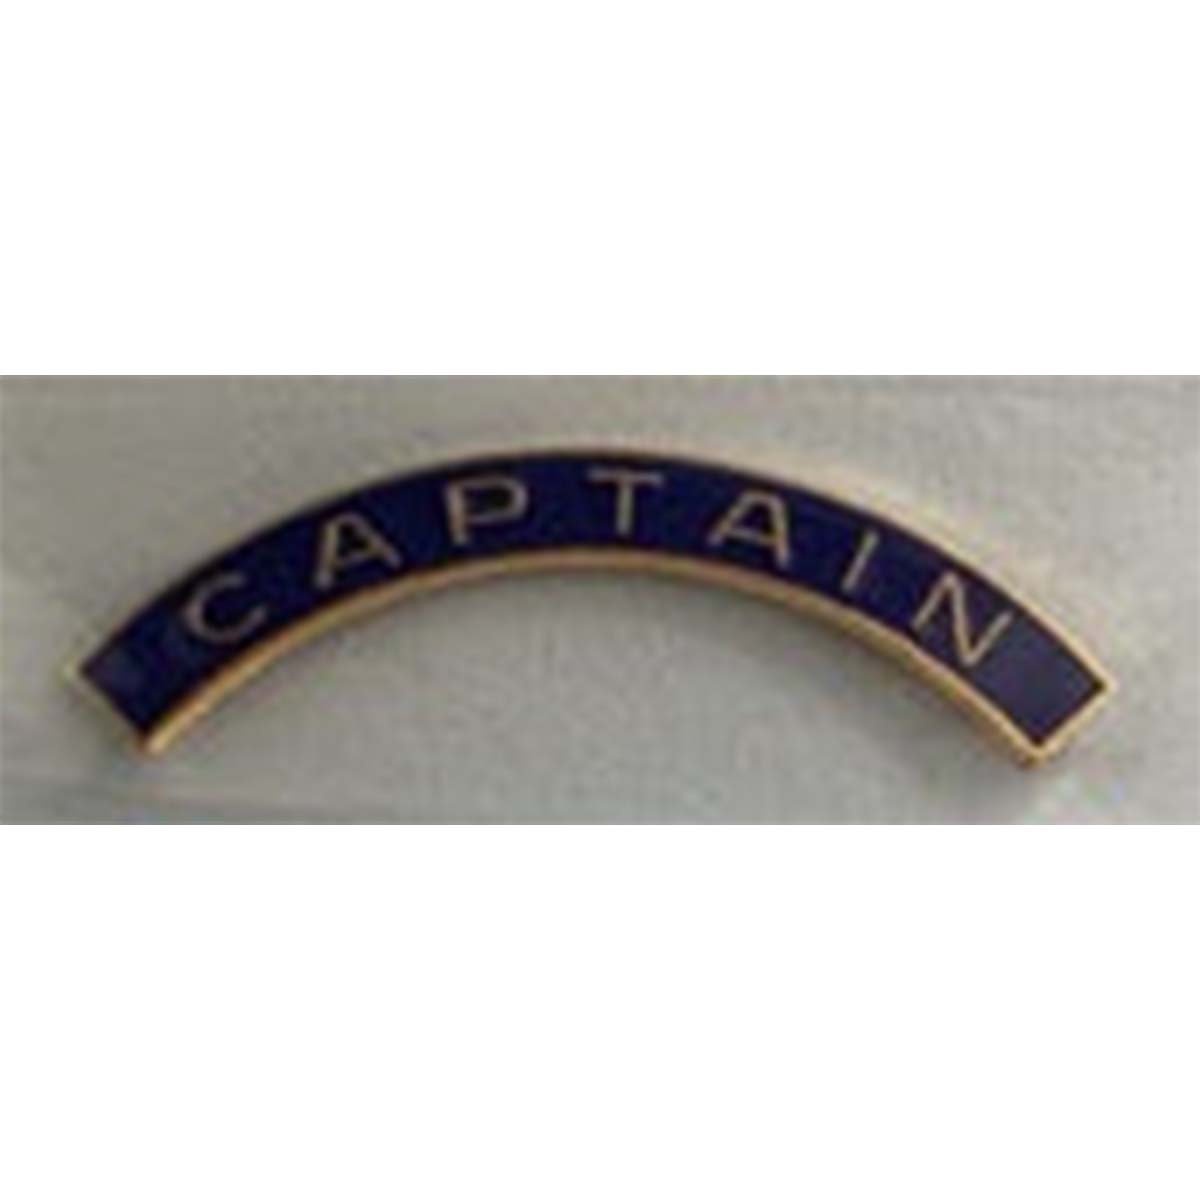 Barra de reemplazo de medalla de ensamblaje - Capitán